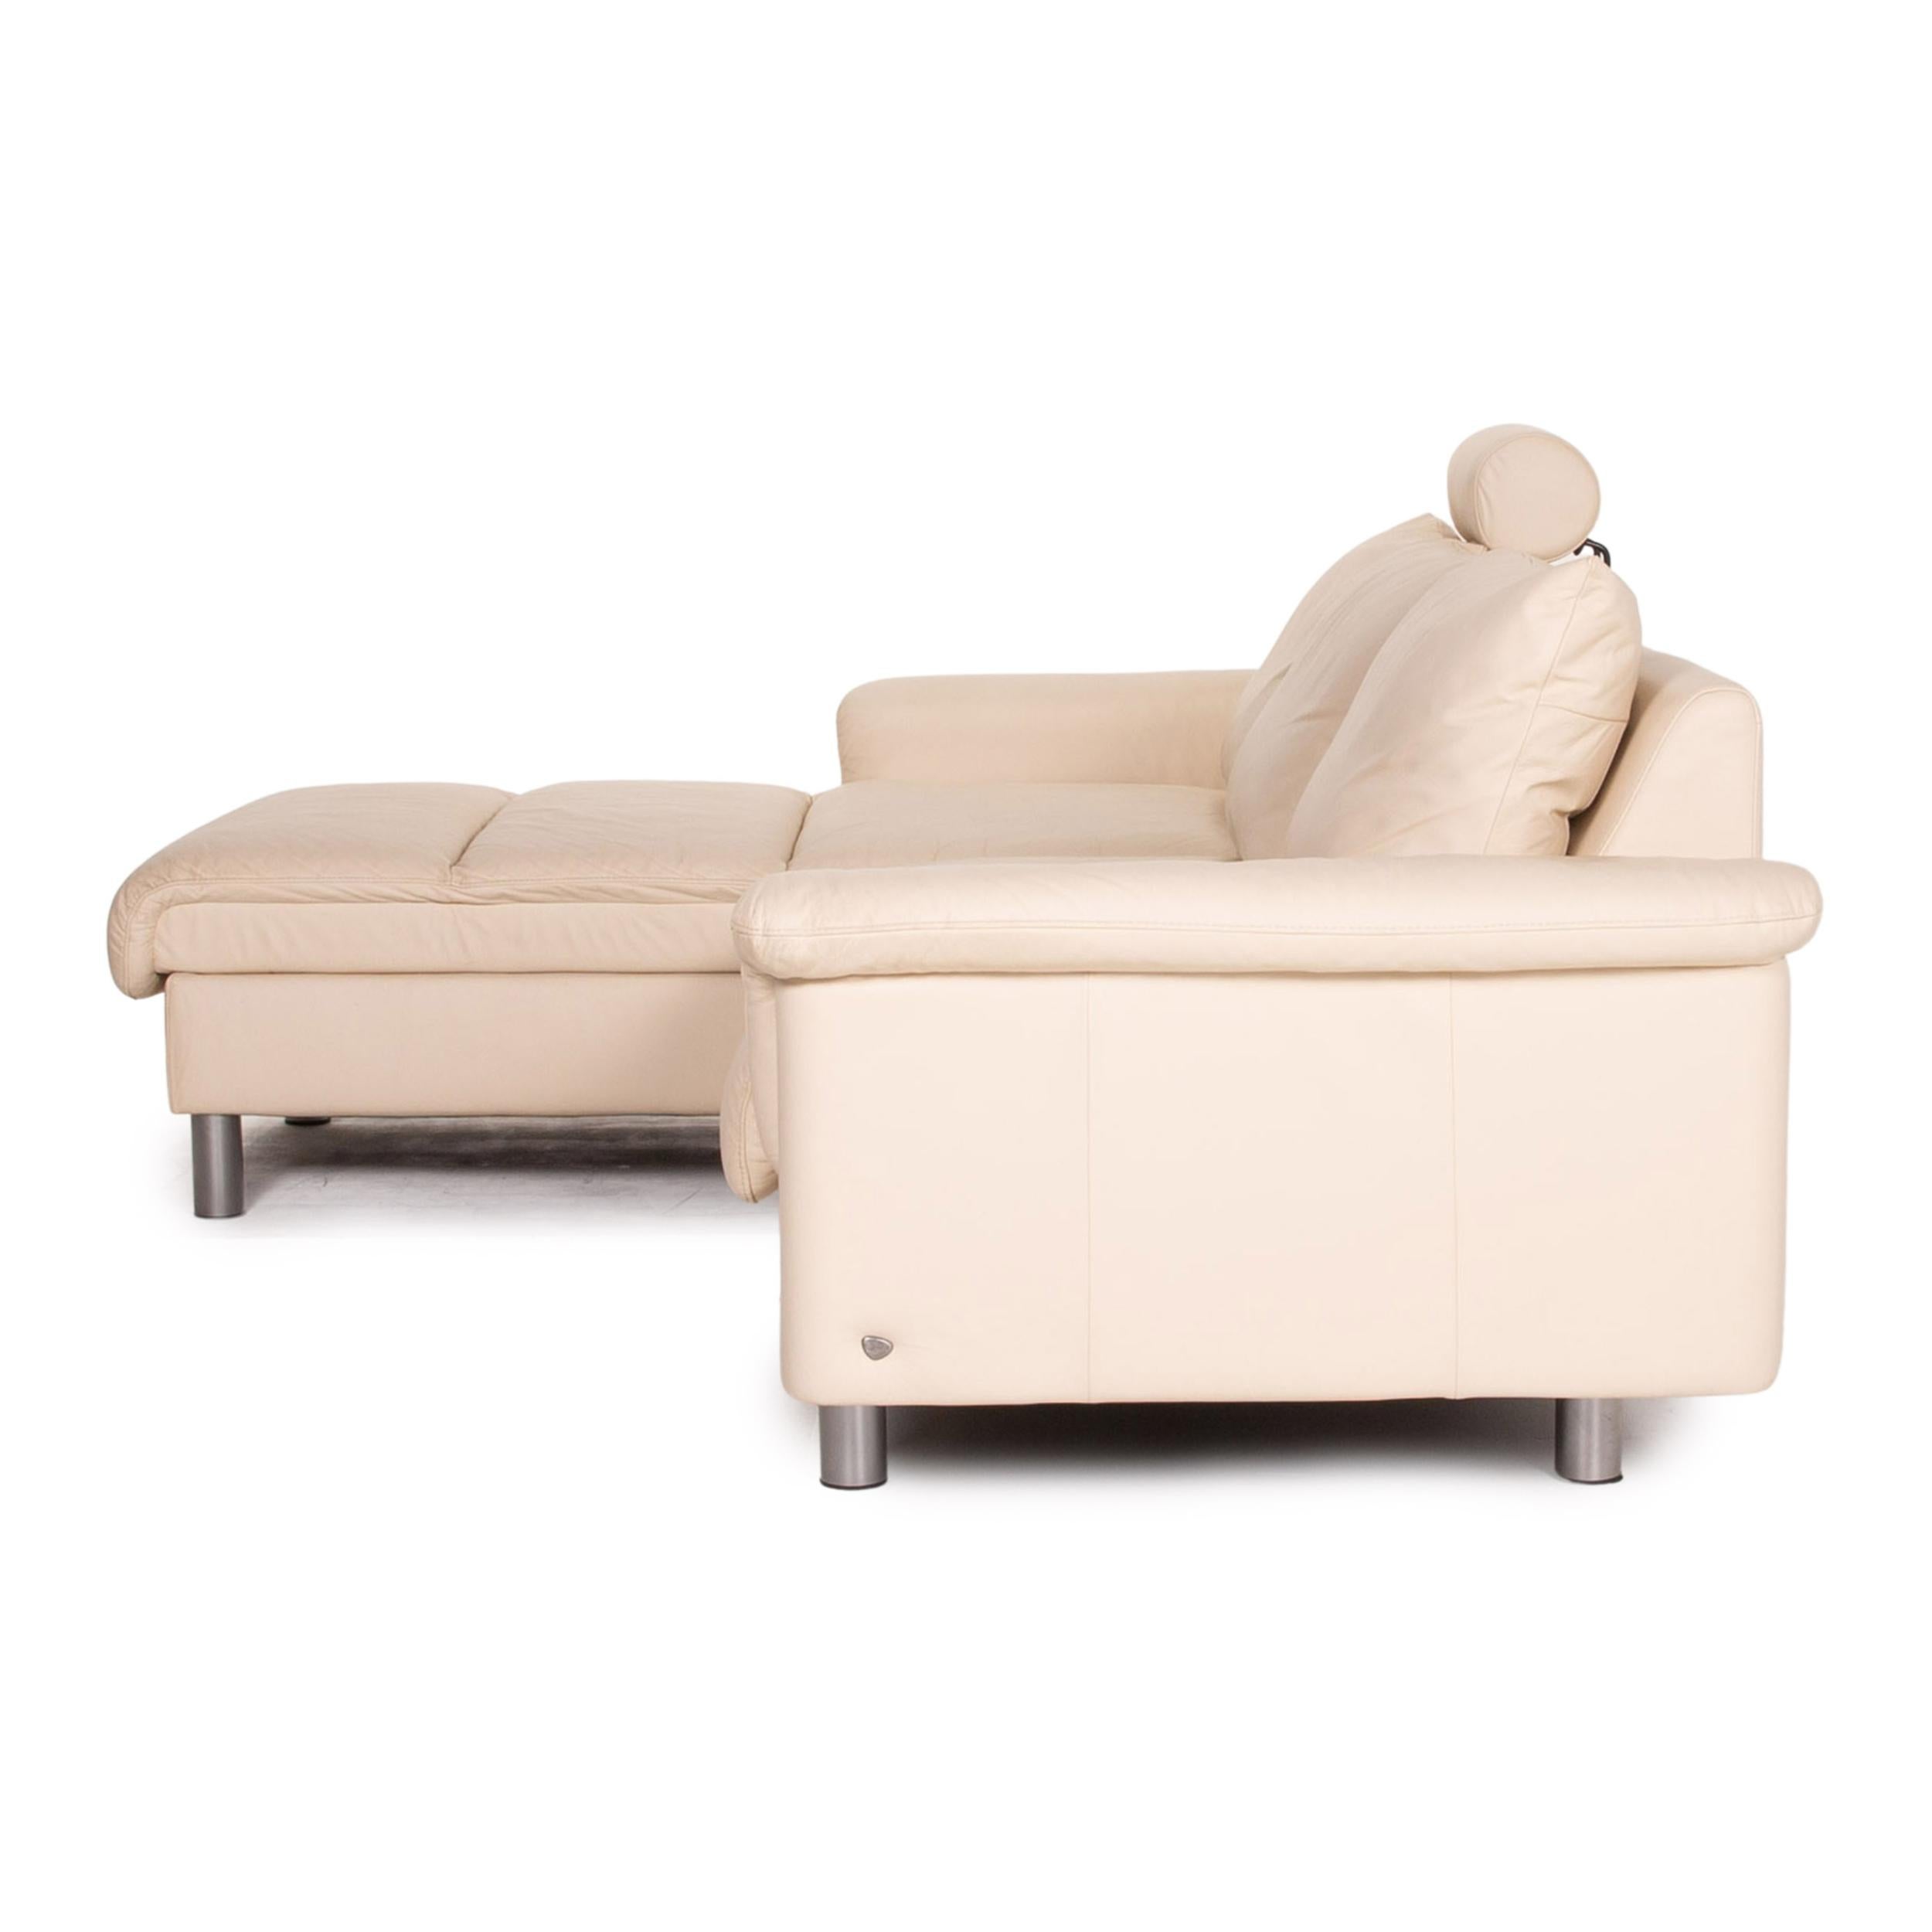 Stressless E300 Leather Corner Sofa Cream Sofa Function Couch 5